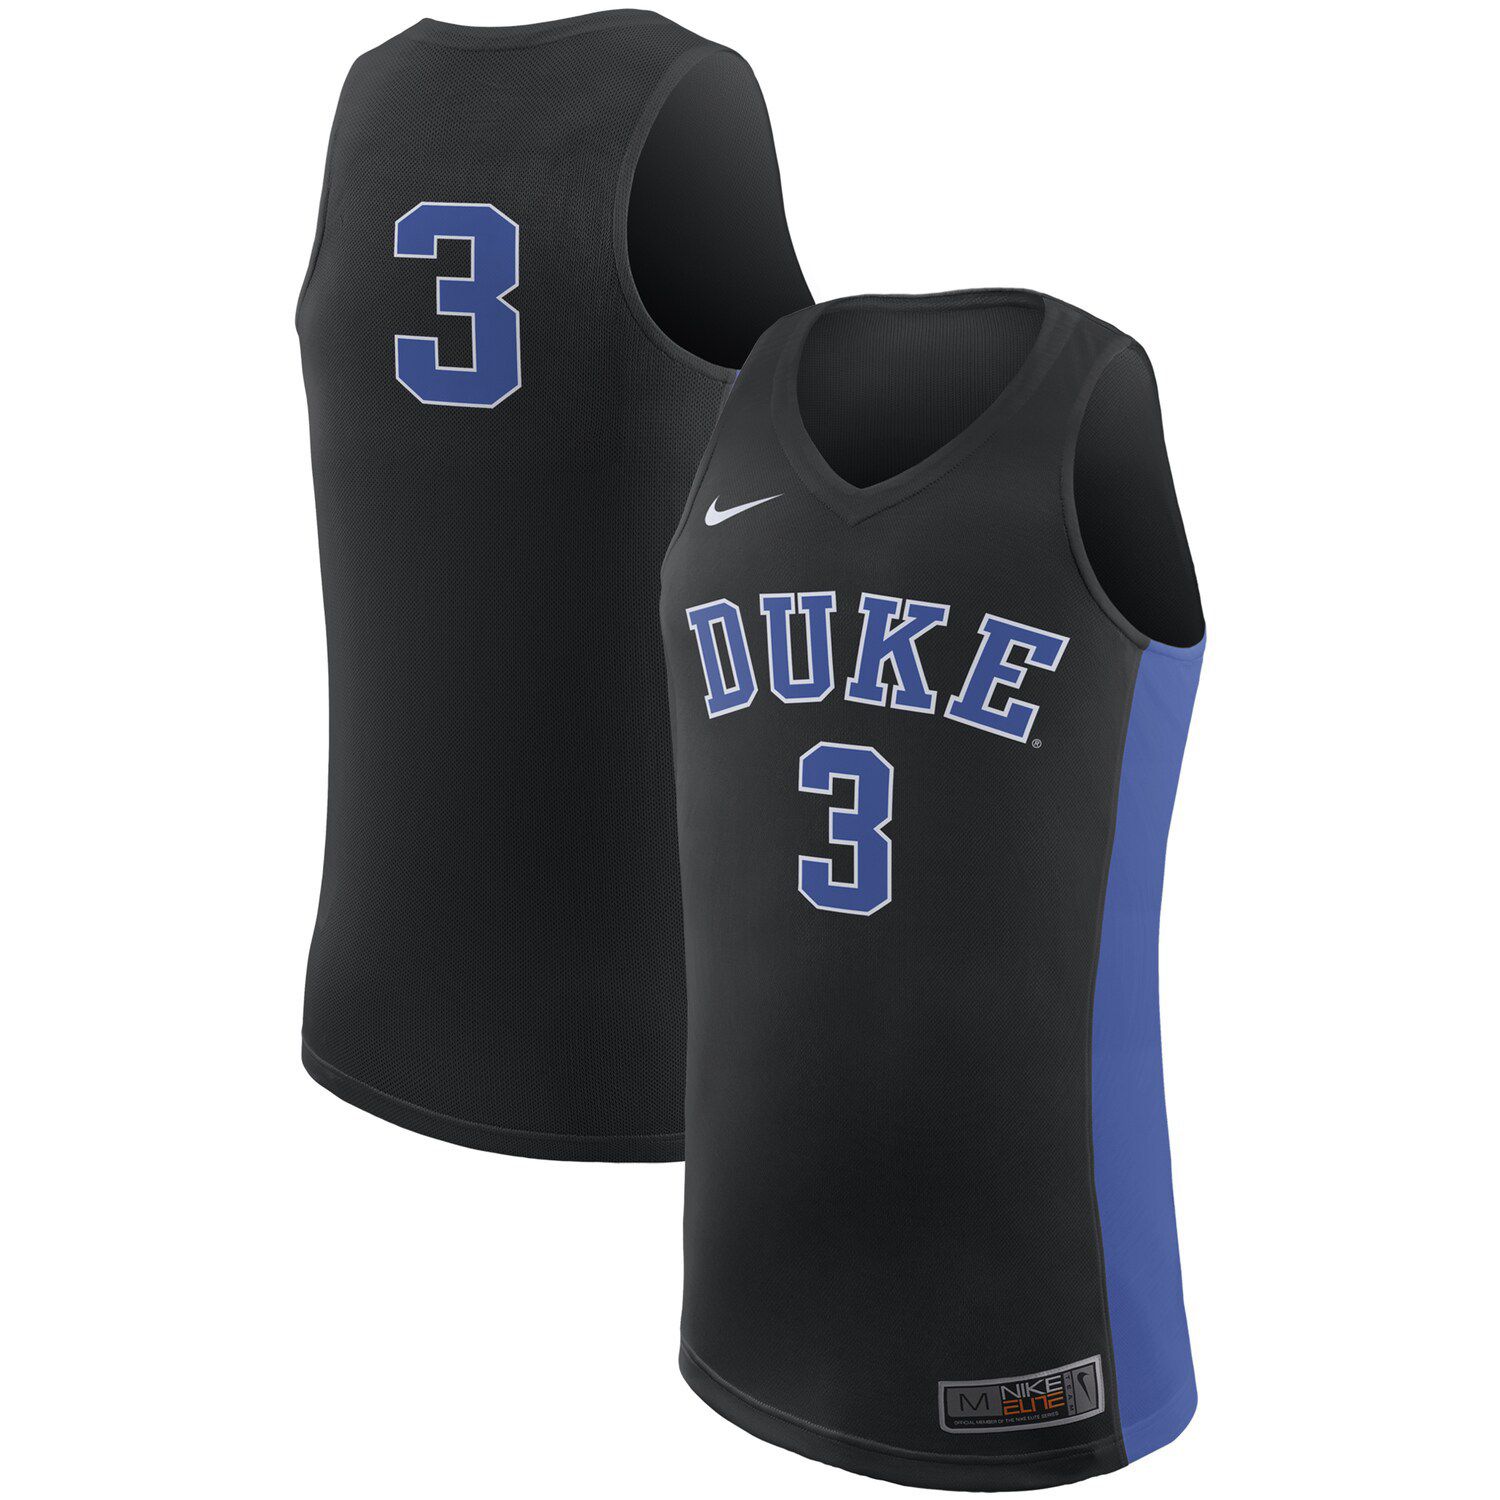 Duke Blue Devils Replica Basketball Jersey